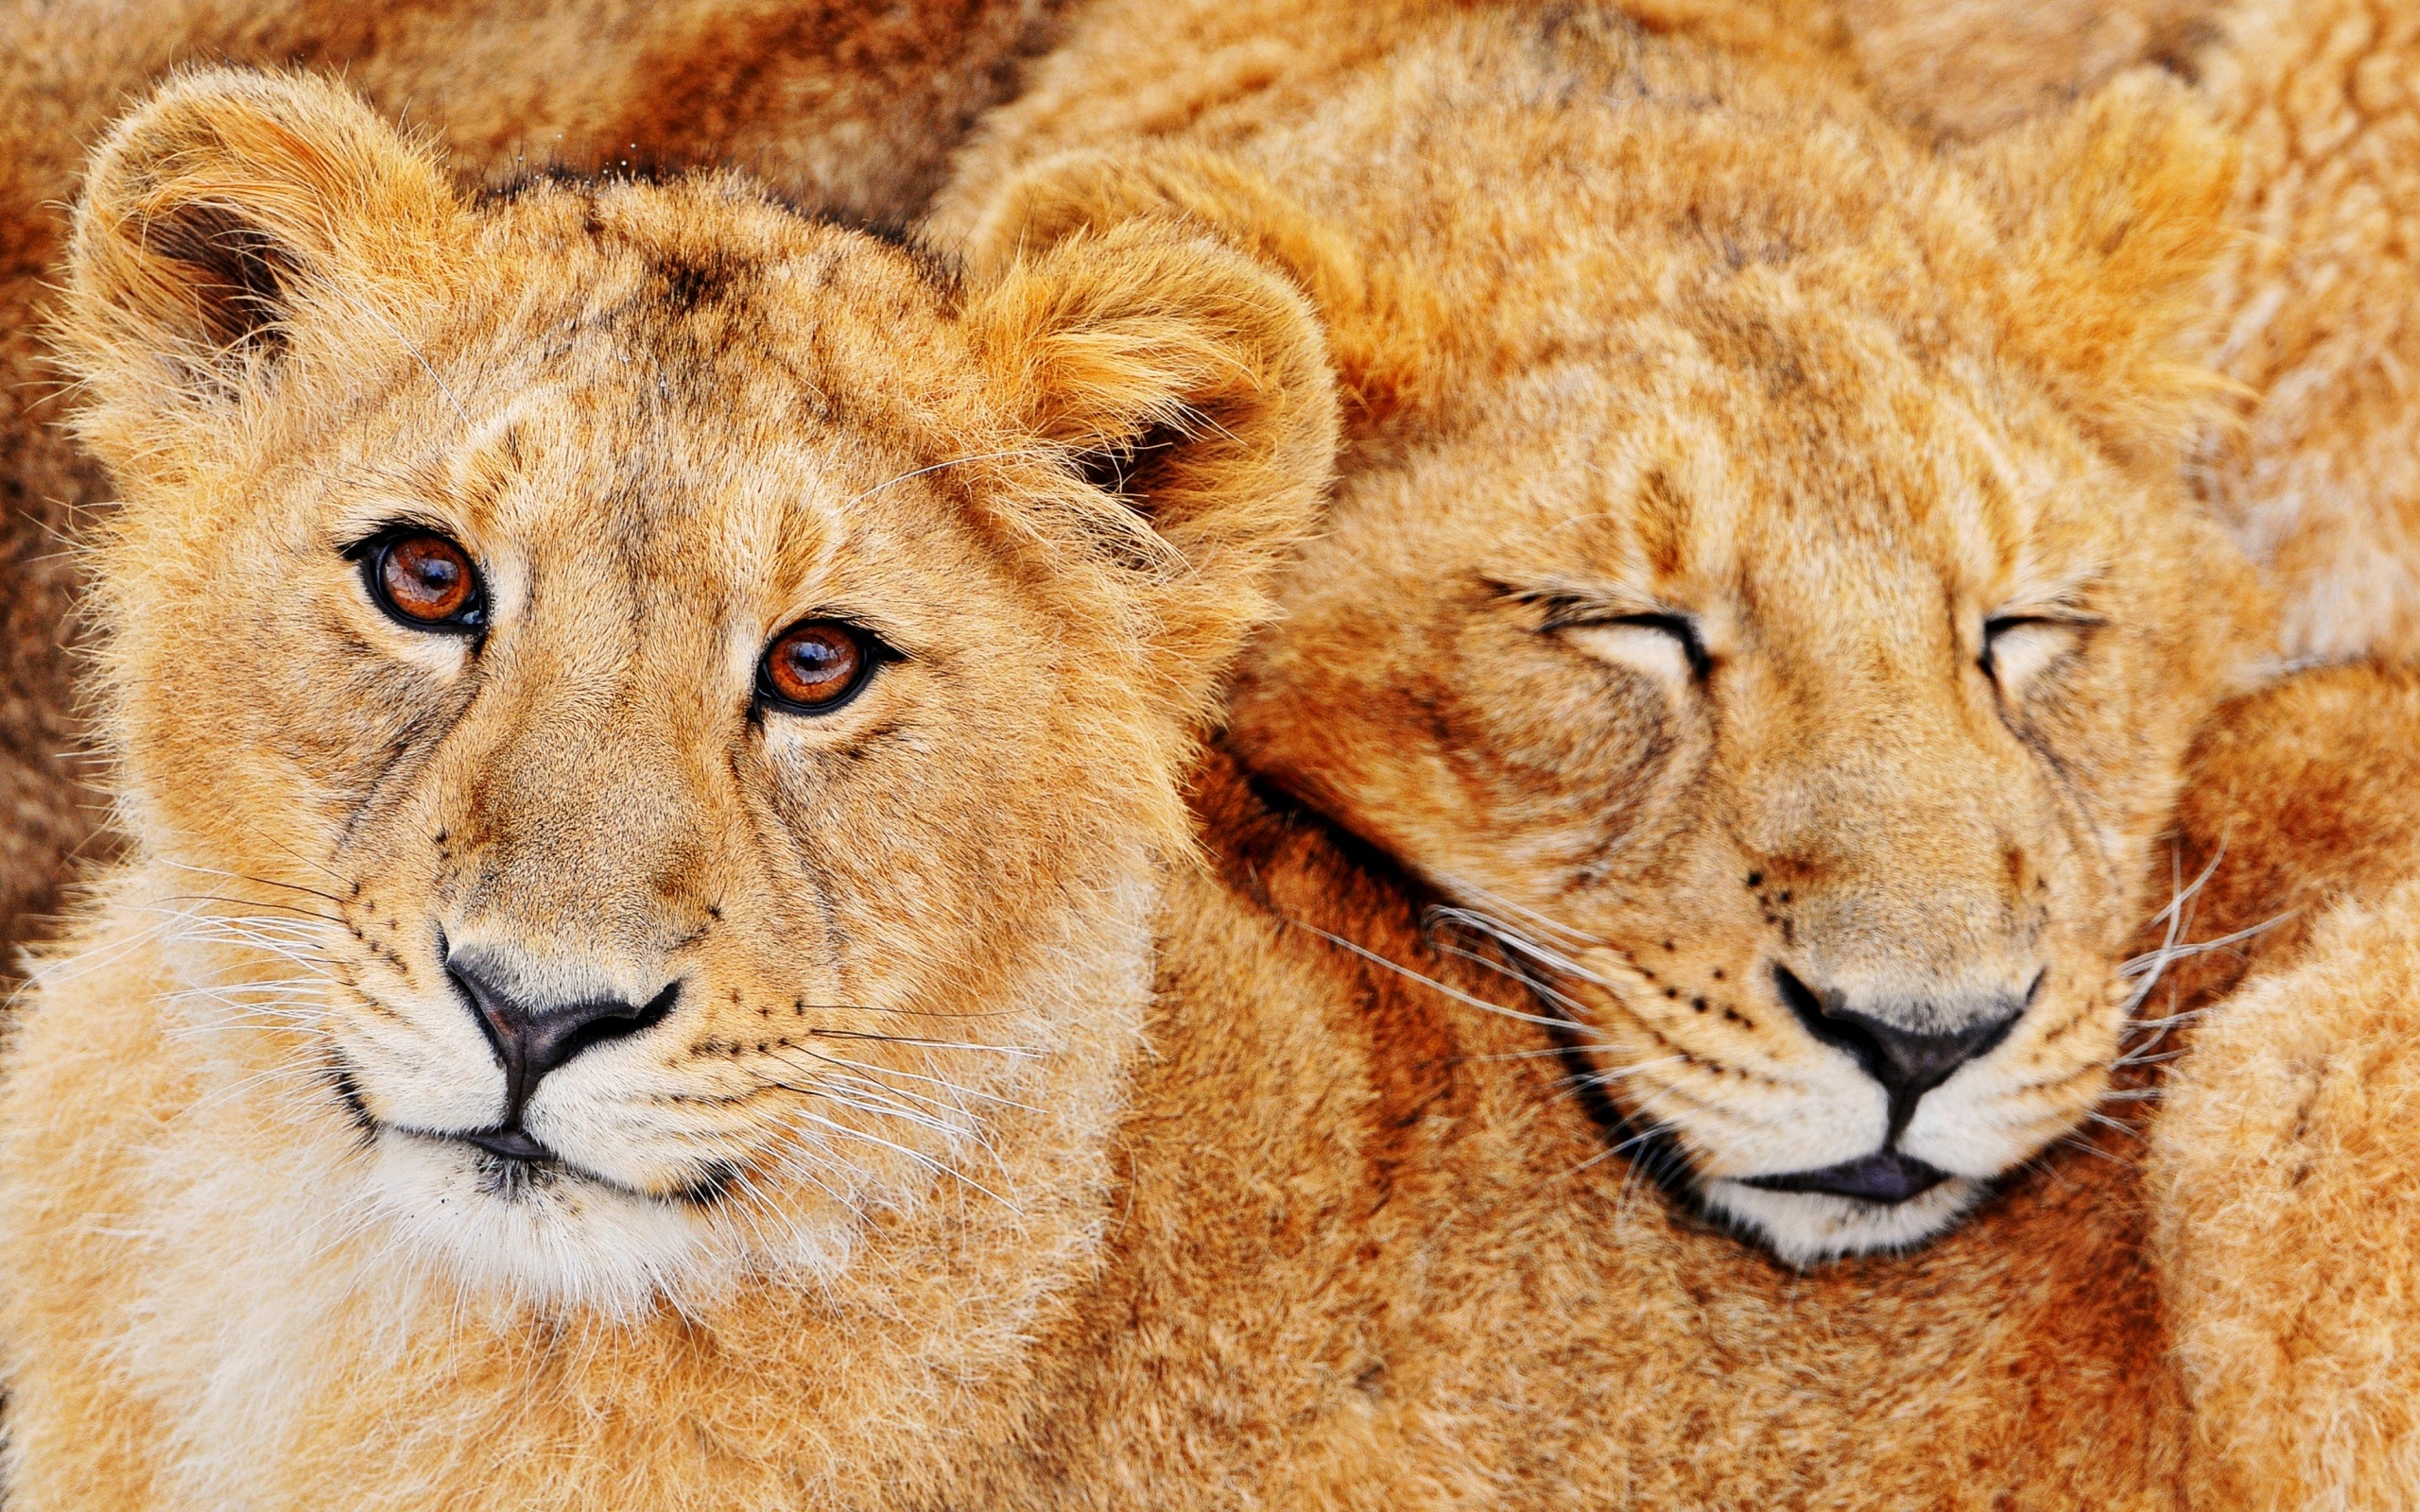 Wallpapers lion wildlife couple on the desktop